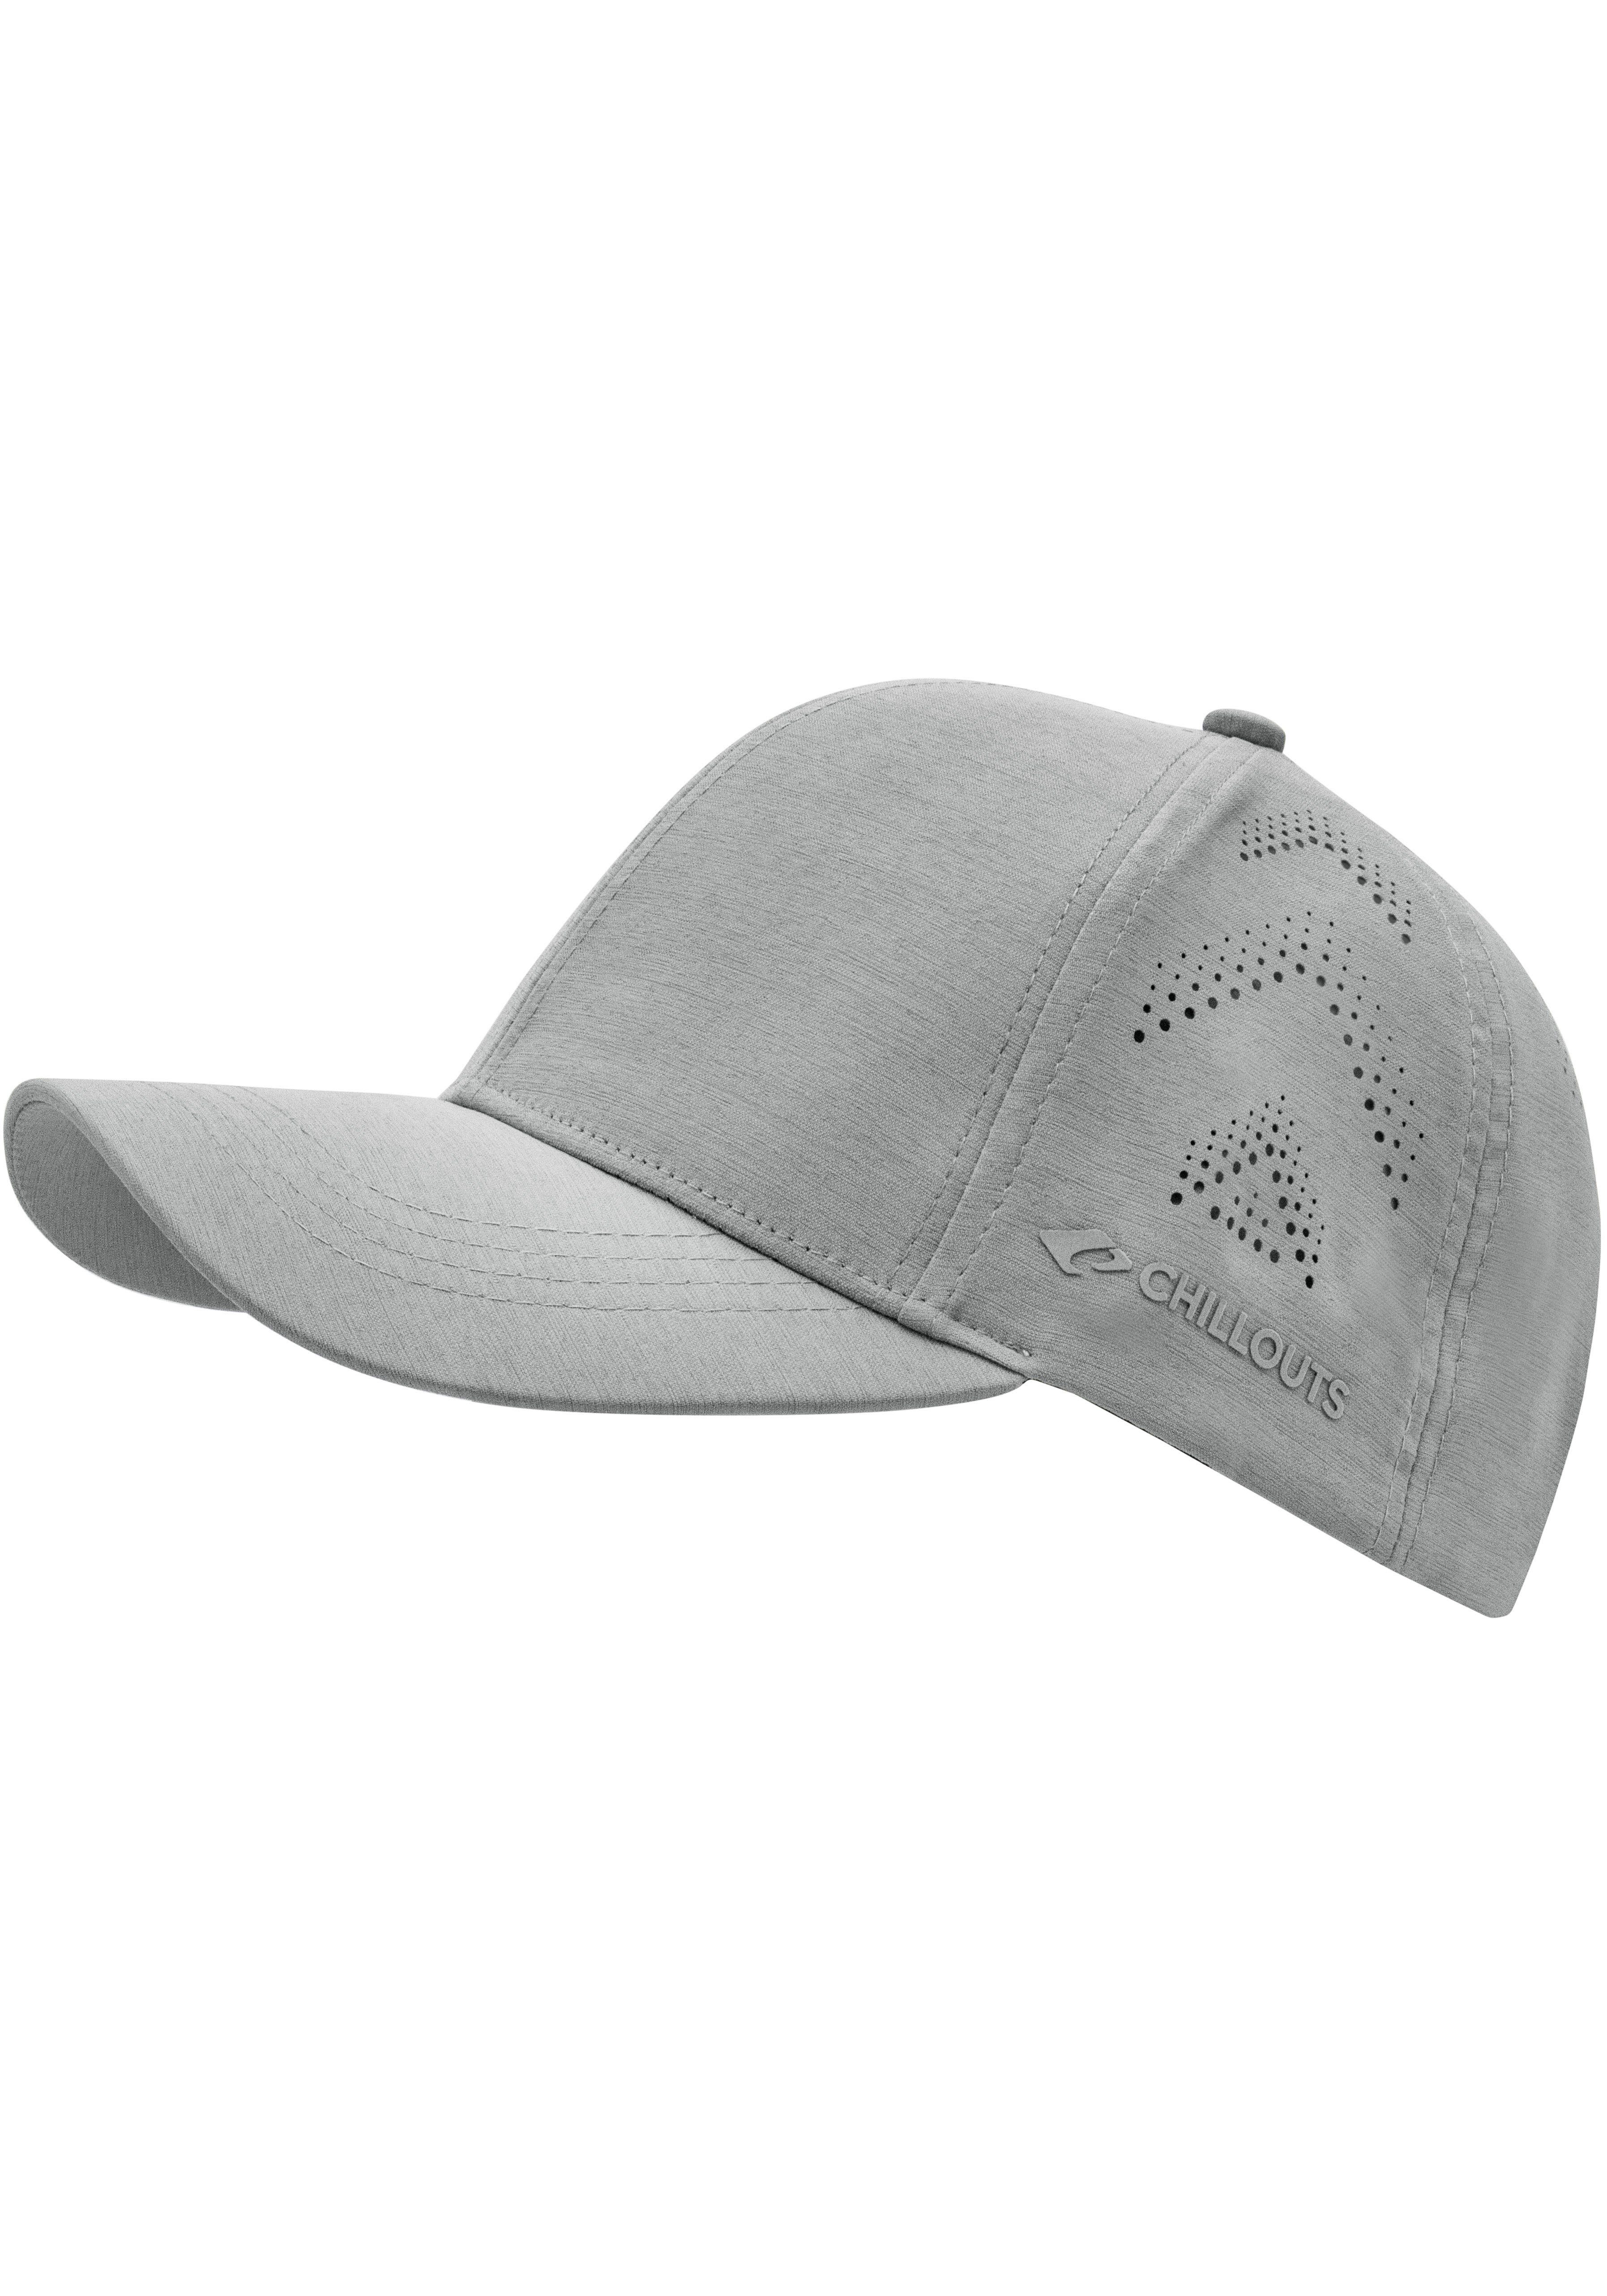 Cap hellgrau Philadelphia Hat, Baseball mit Klettverschluß, UPF50+ chillouts Cap